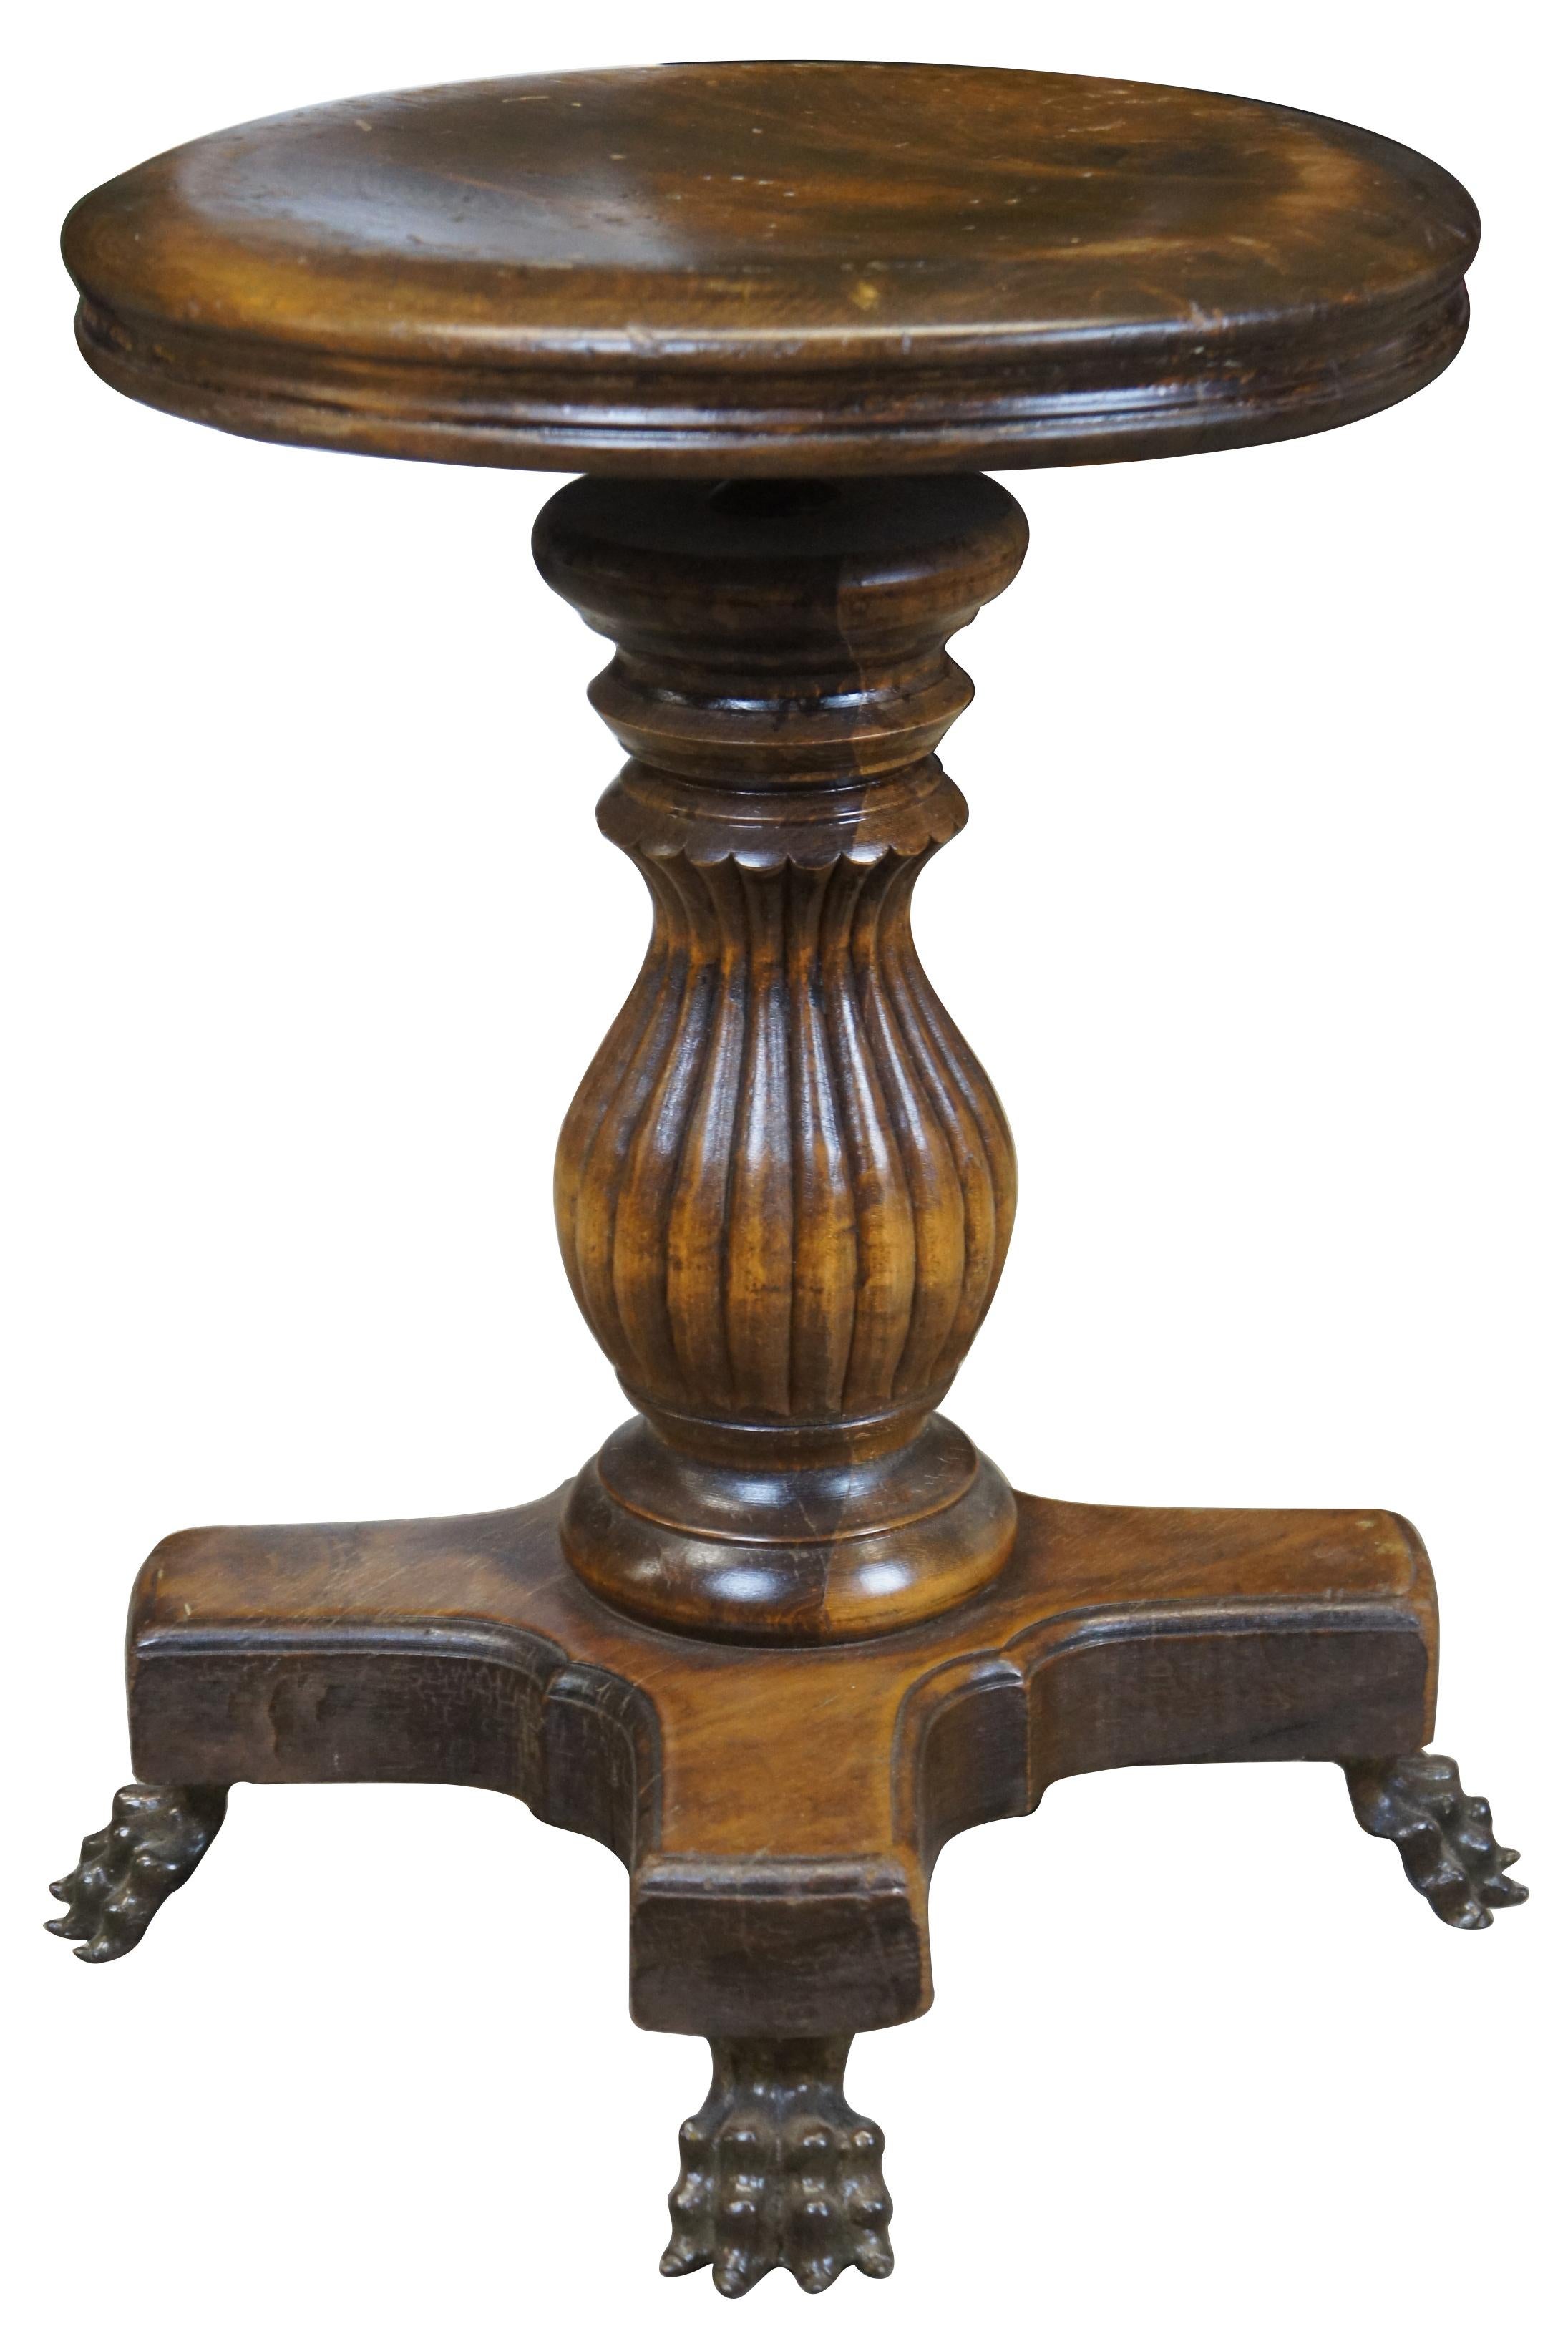 American walnut antique piano stool by Davis Chair Company of Marysville Ohio.
 